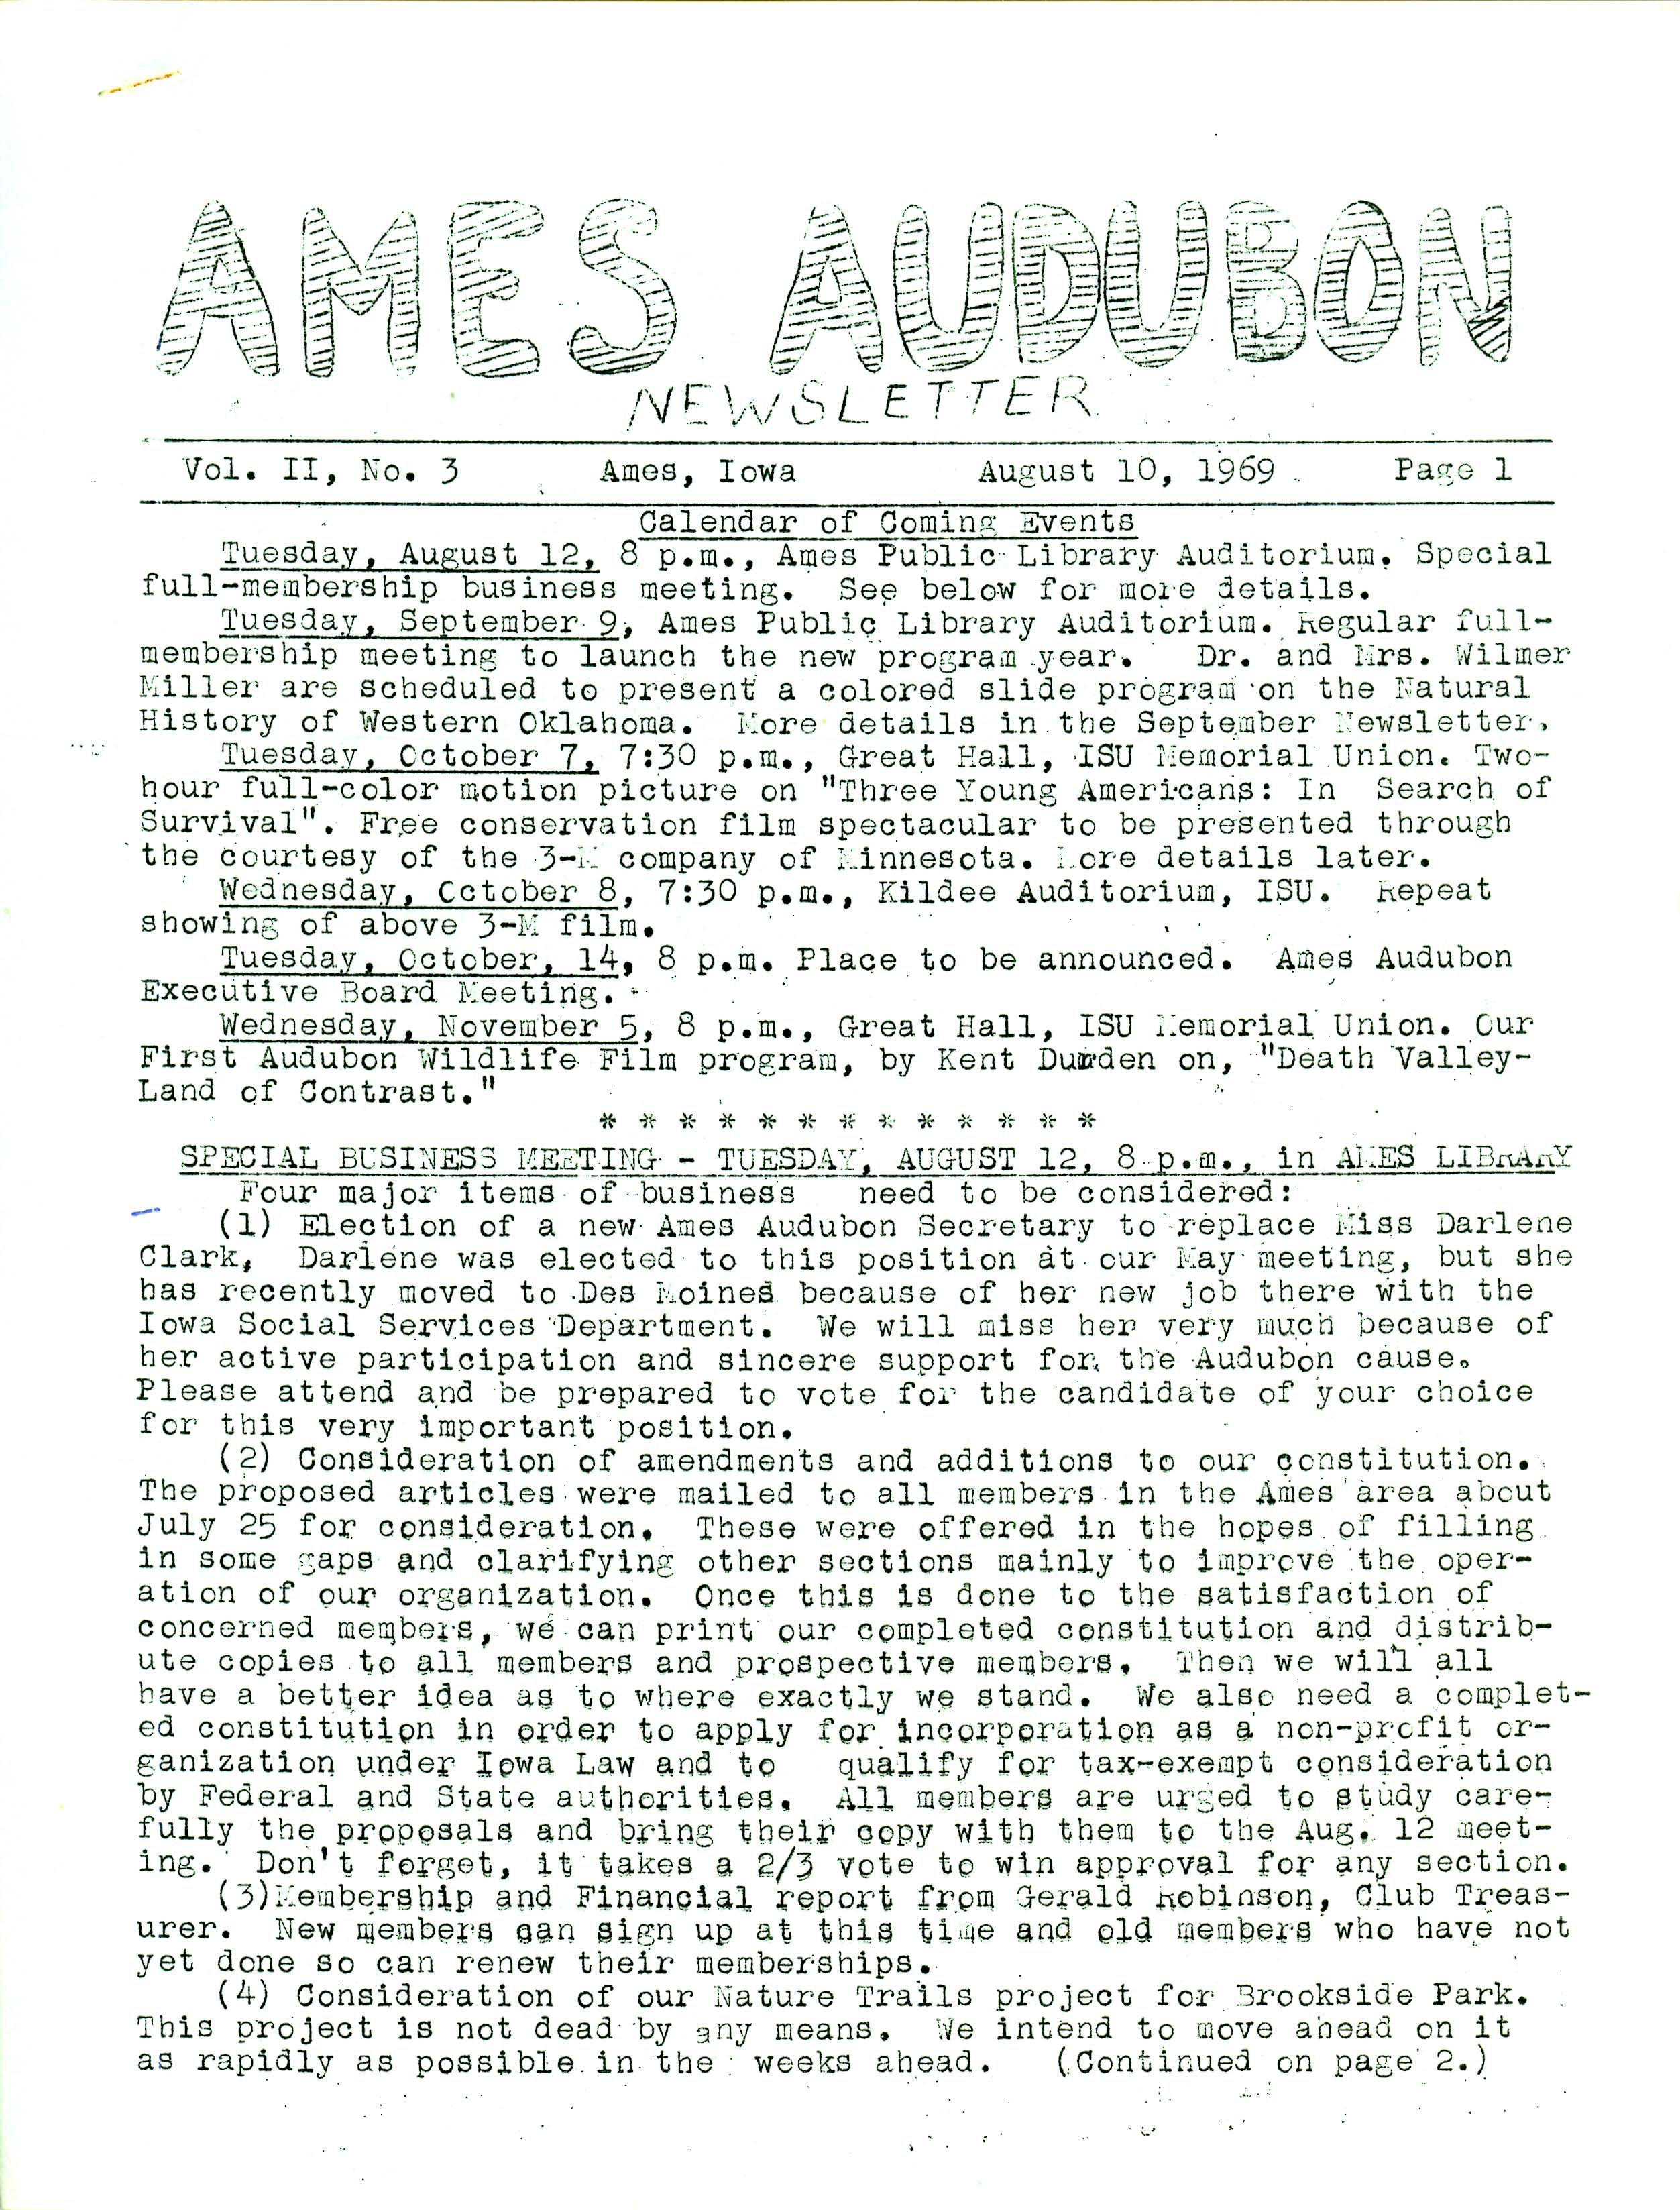 Ames Audubon Newsletter, Volume 2, Number 3, August 10, 1969